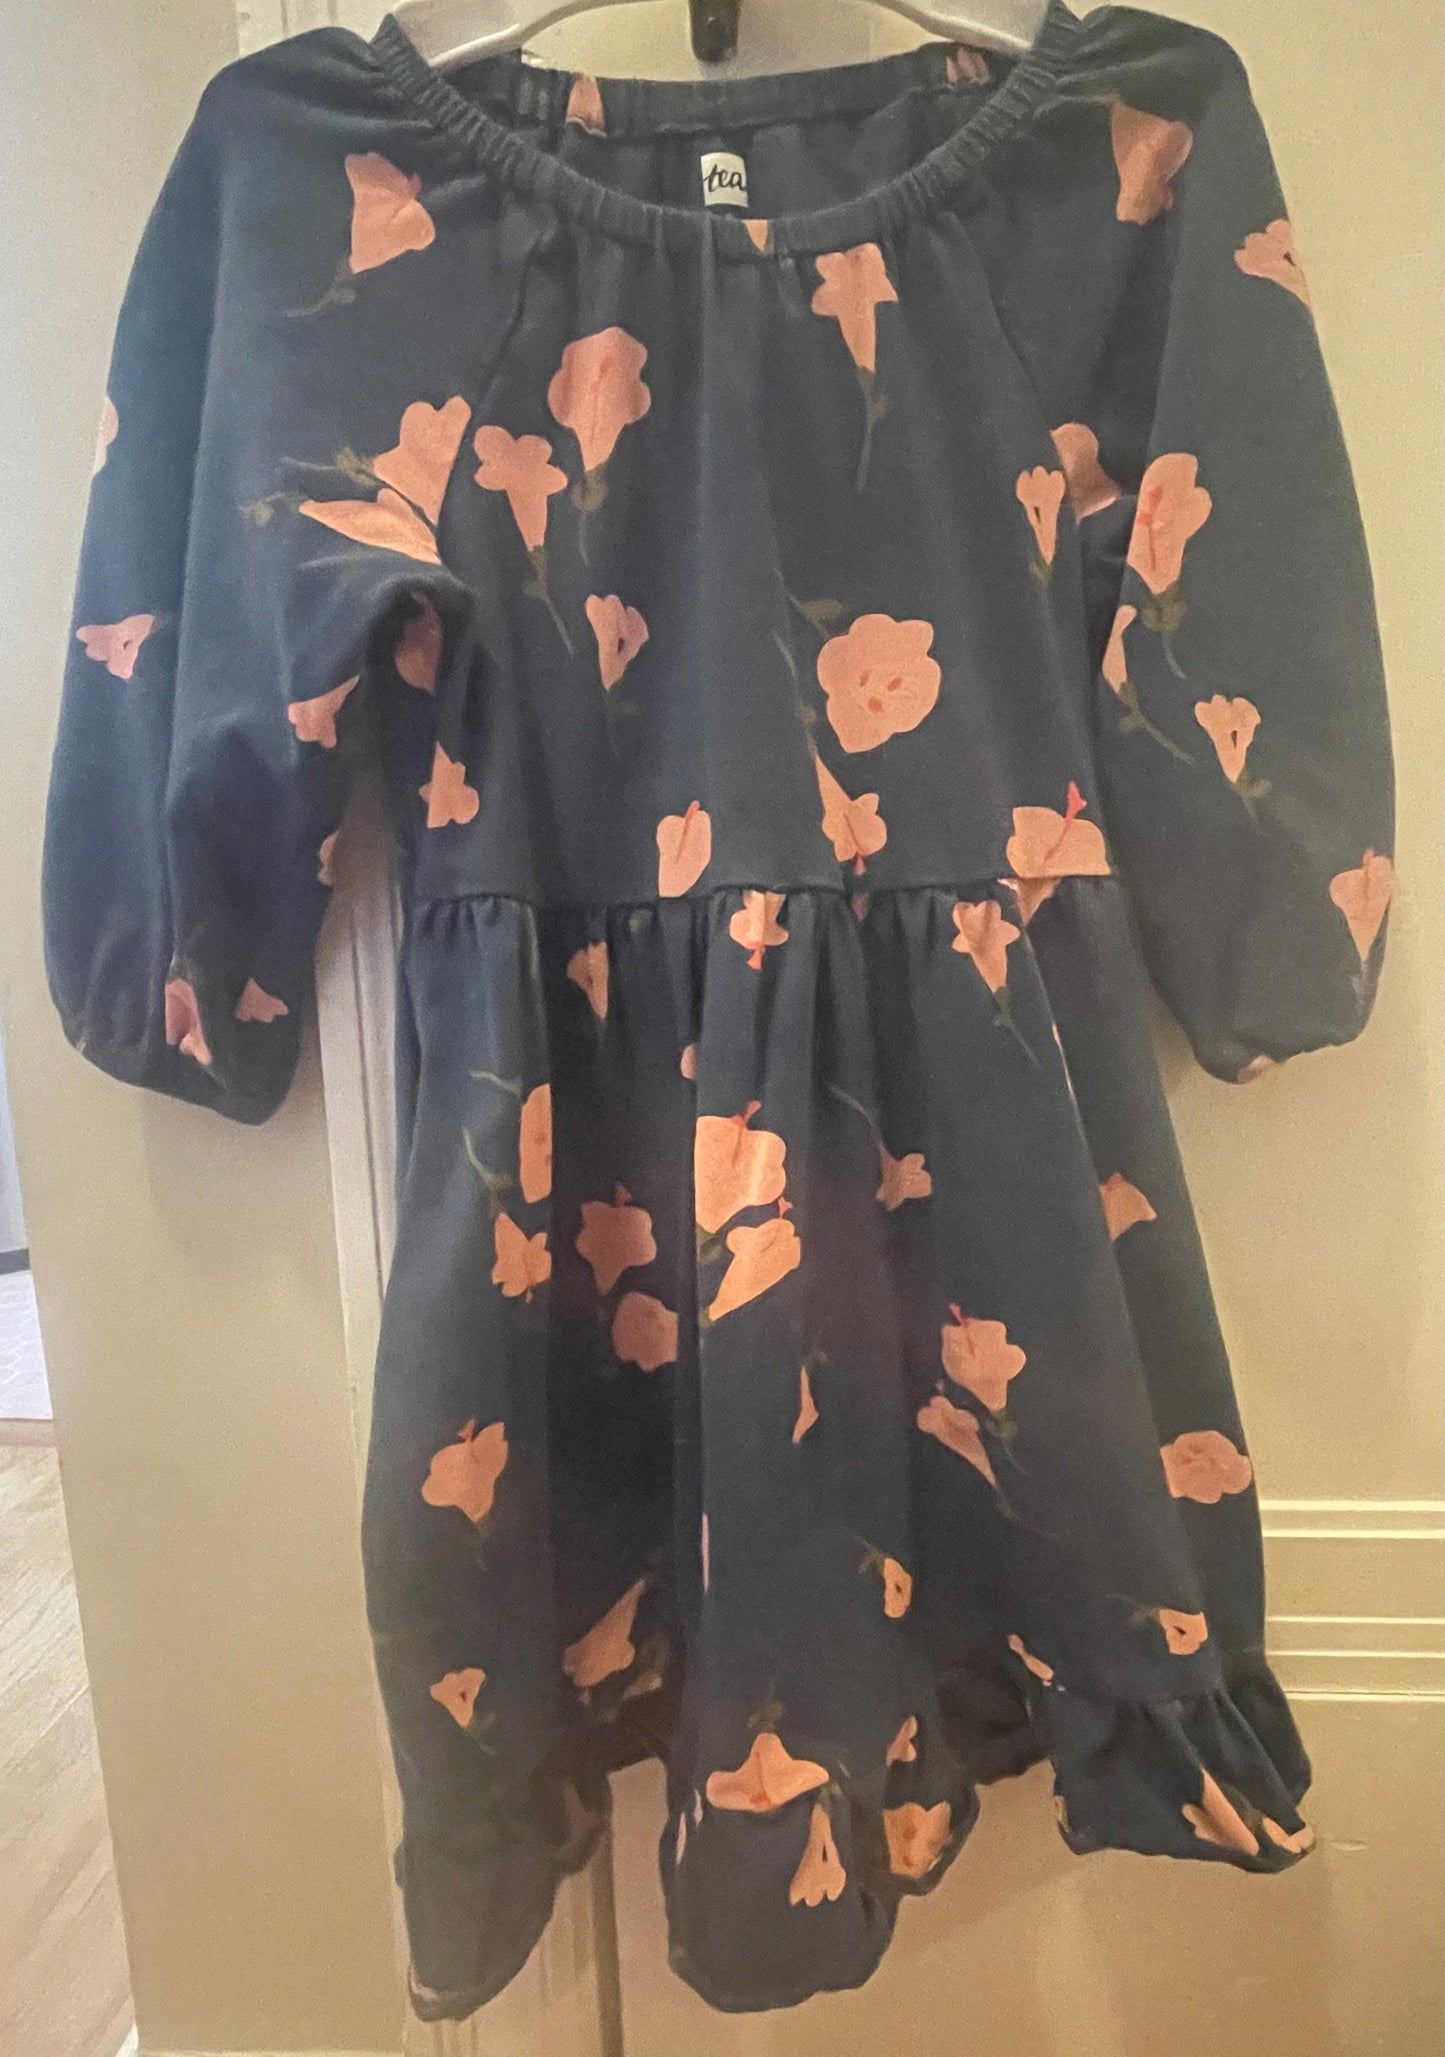 Size 5 - Tea collection - floral dress